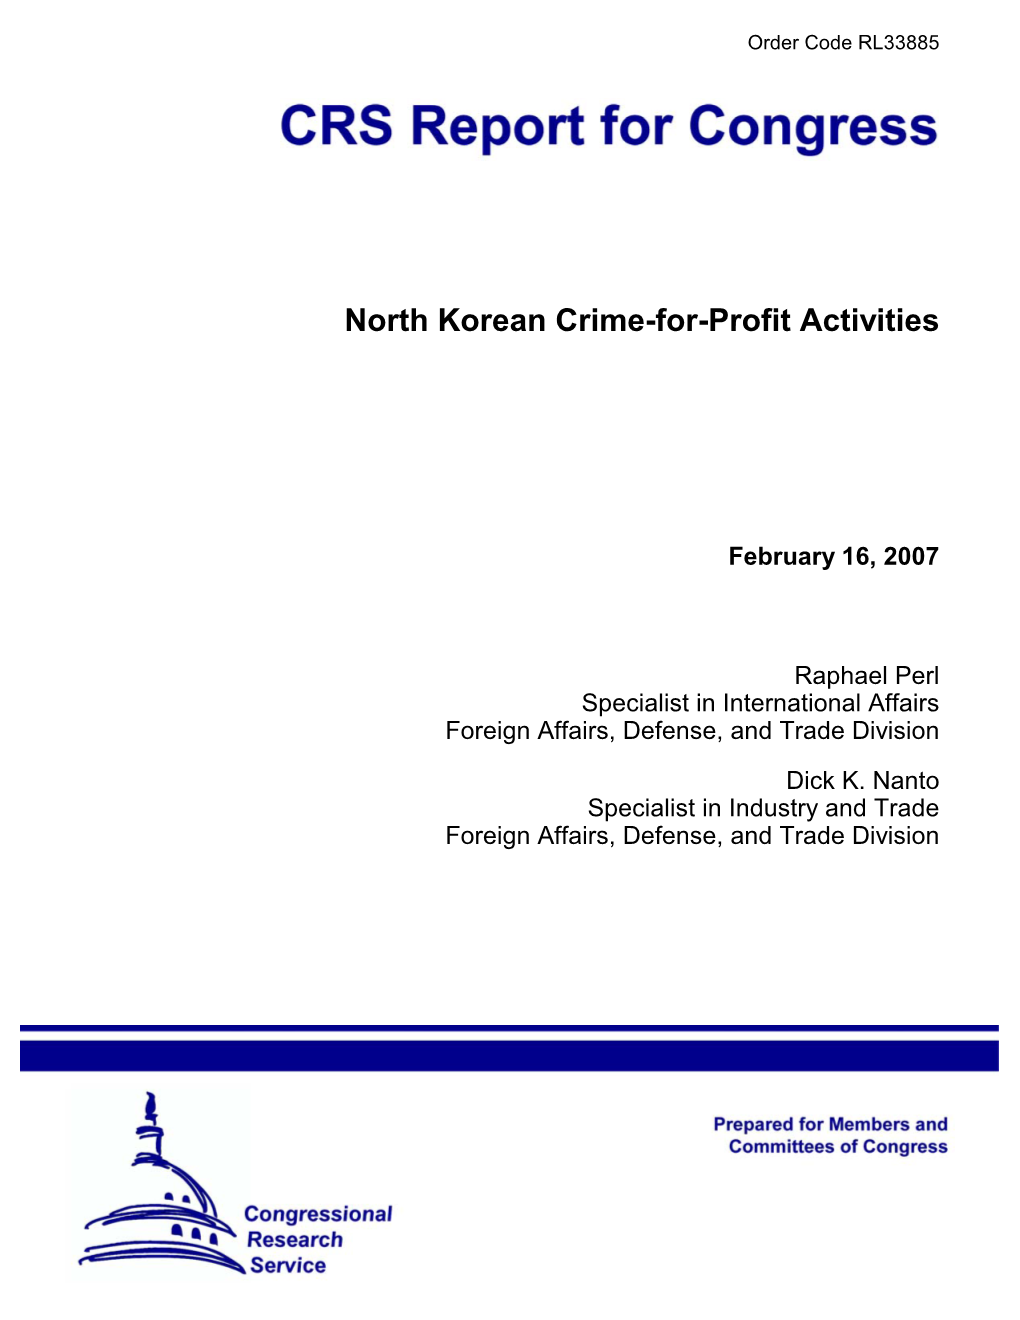 North Korean Crime-For-Profit Activities